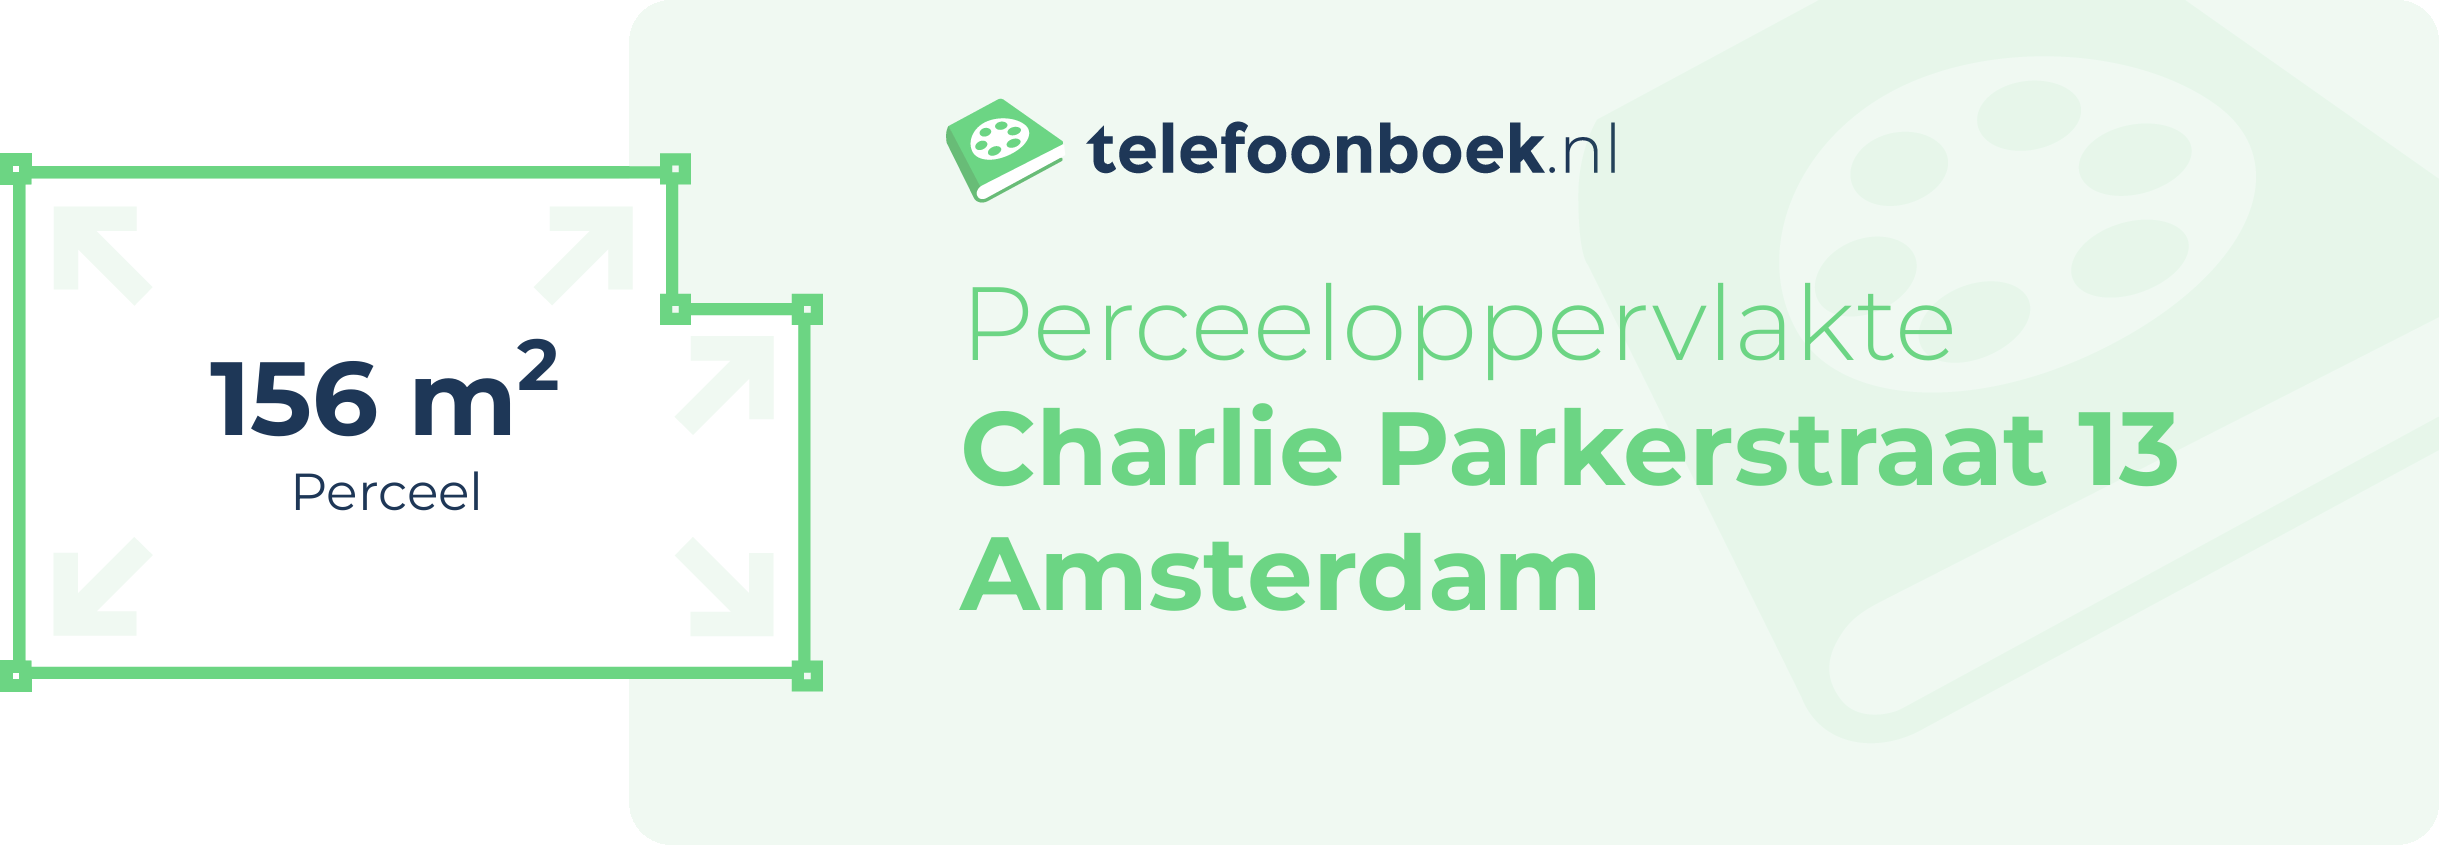 Perceeloppervlakte Charlie Parkerstraat 13 Amsterdam